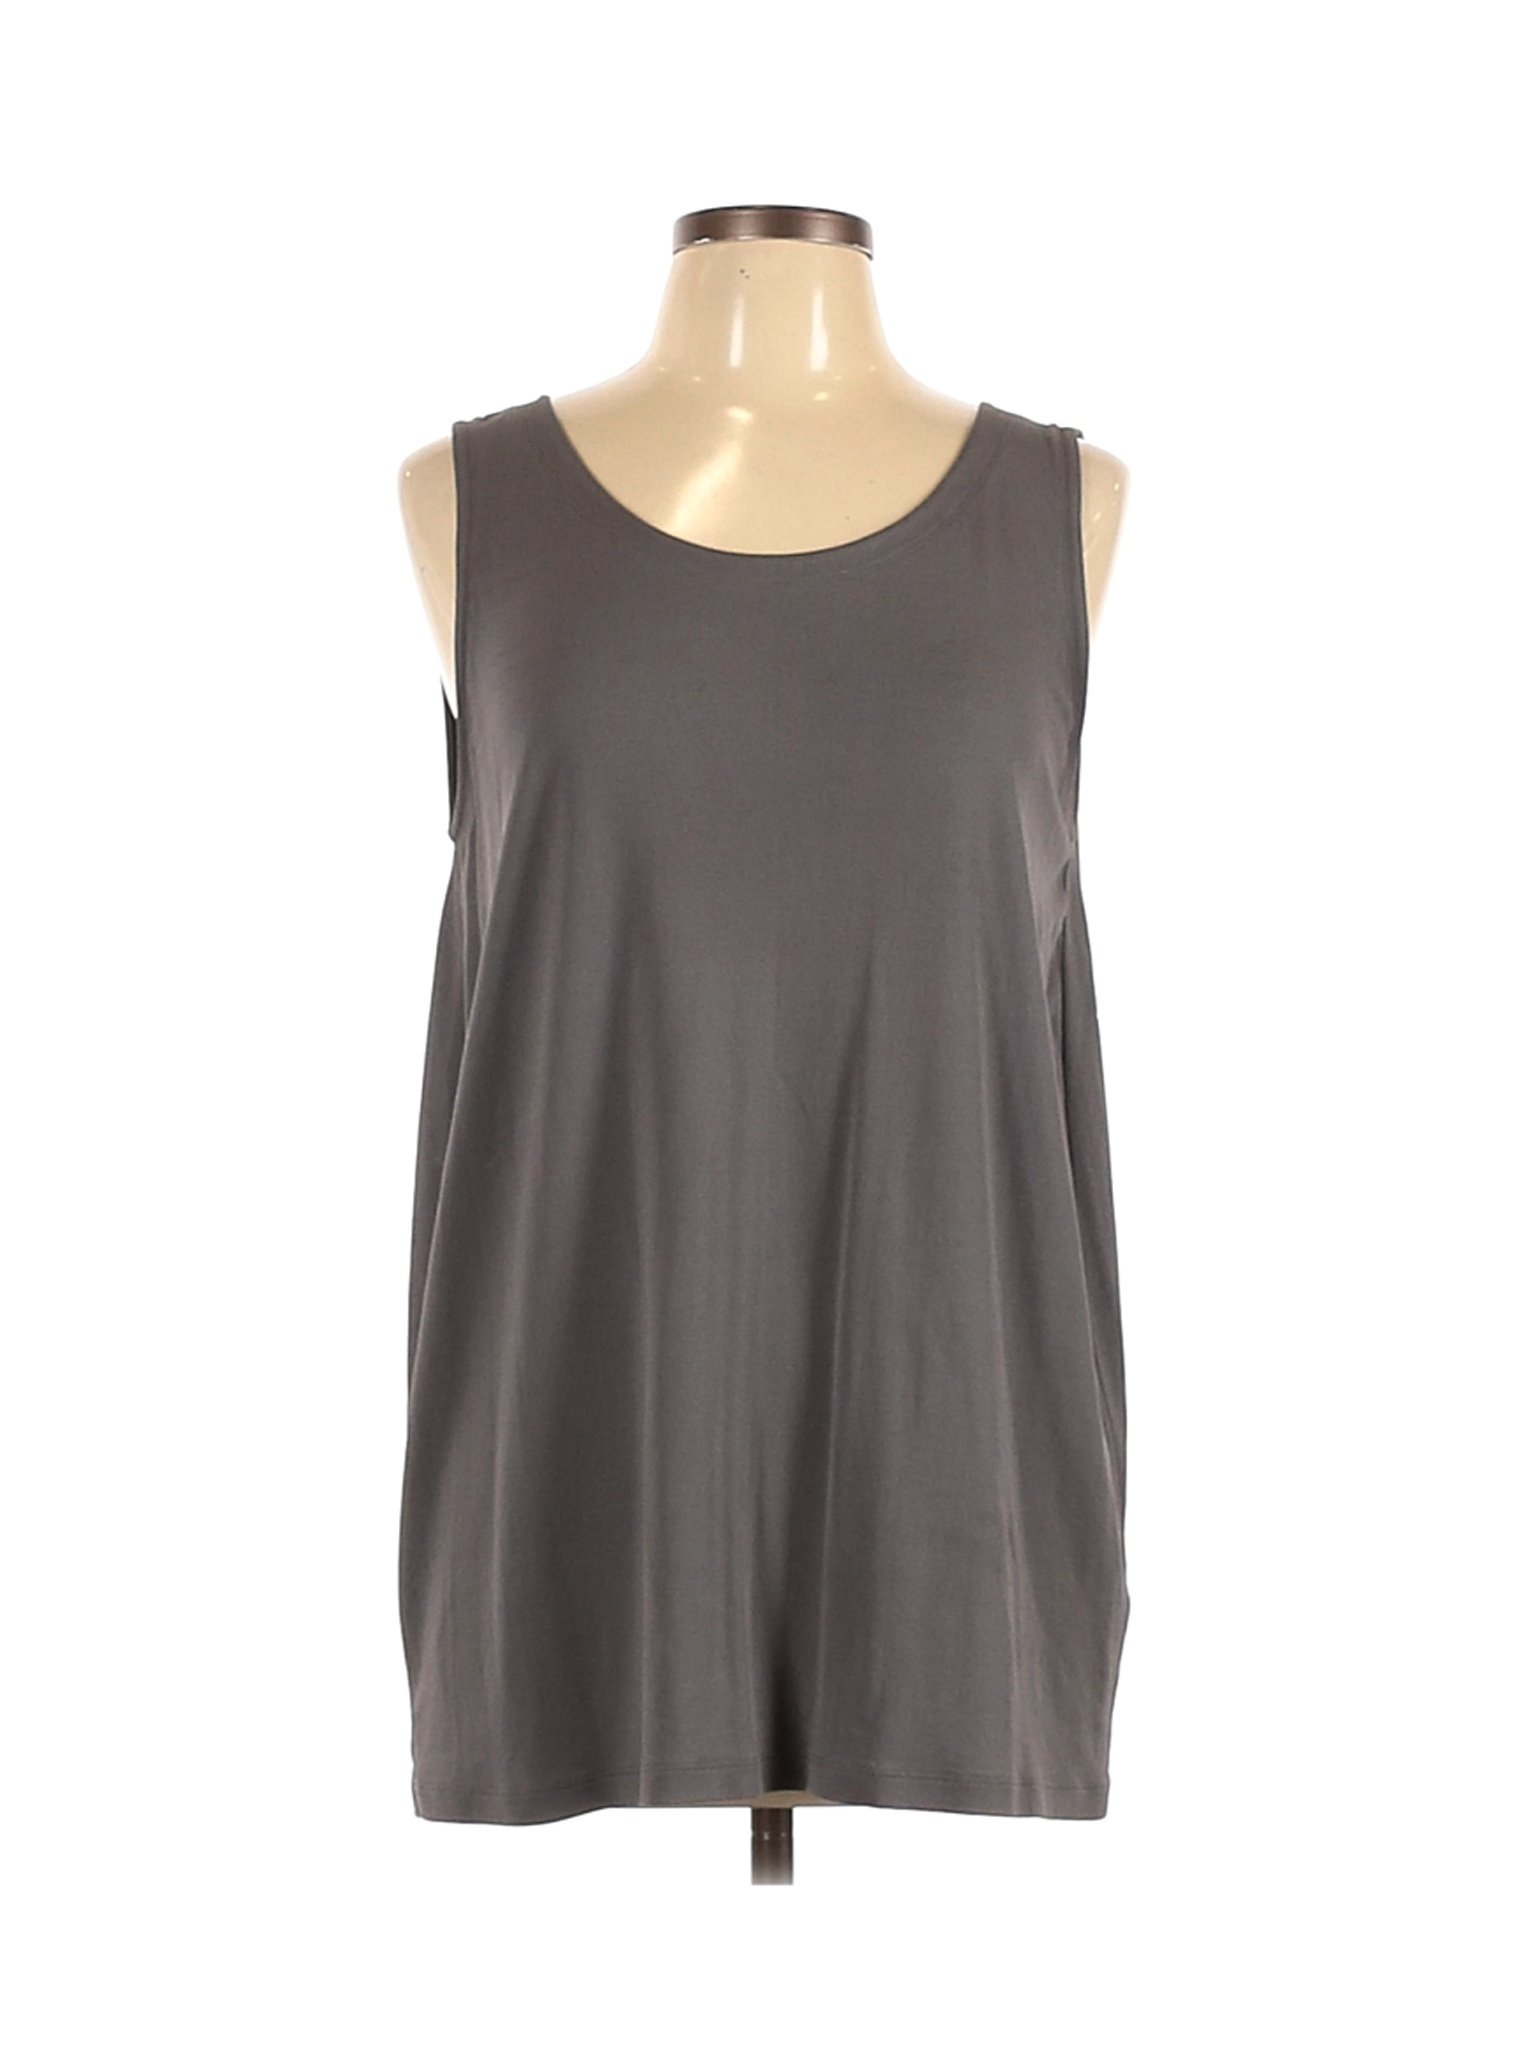 Eileen Fisher Women Gray Sleeveless Silk Top L Petites | eBay